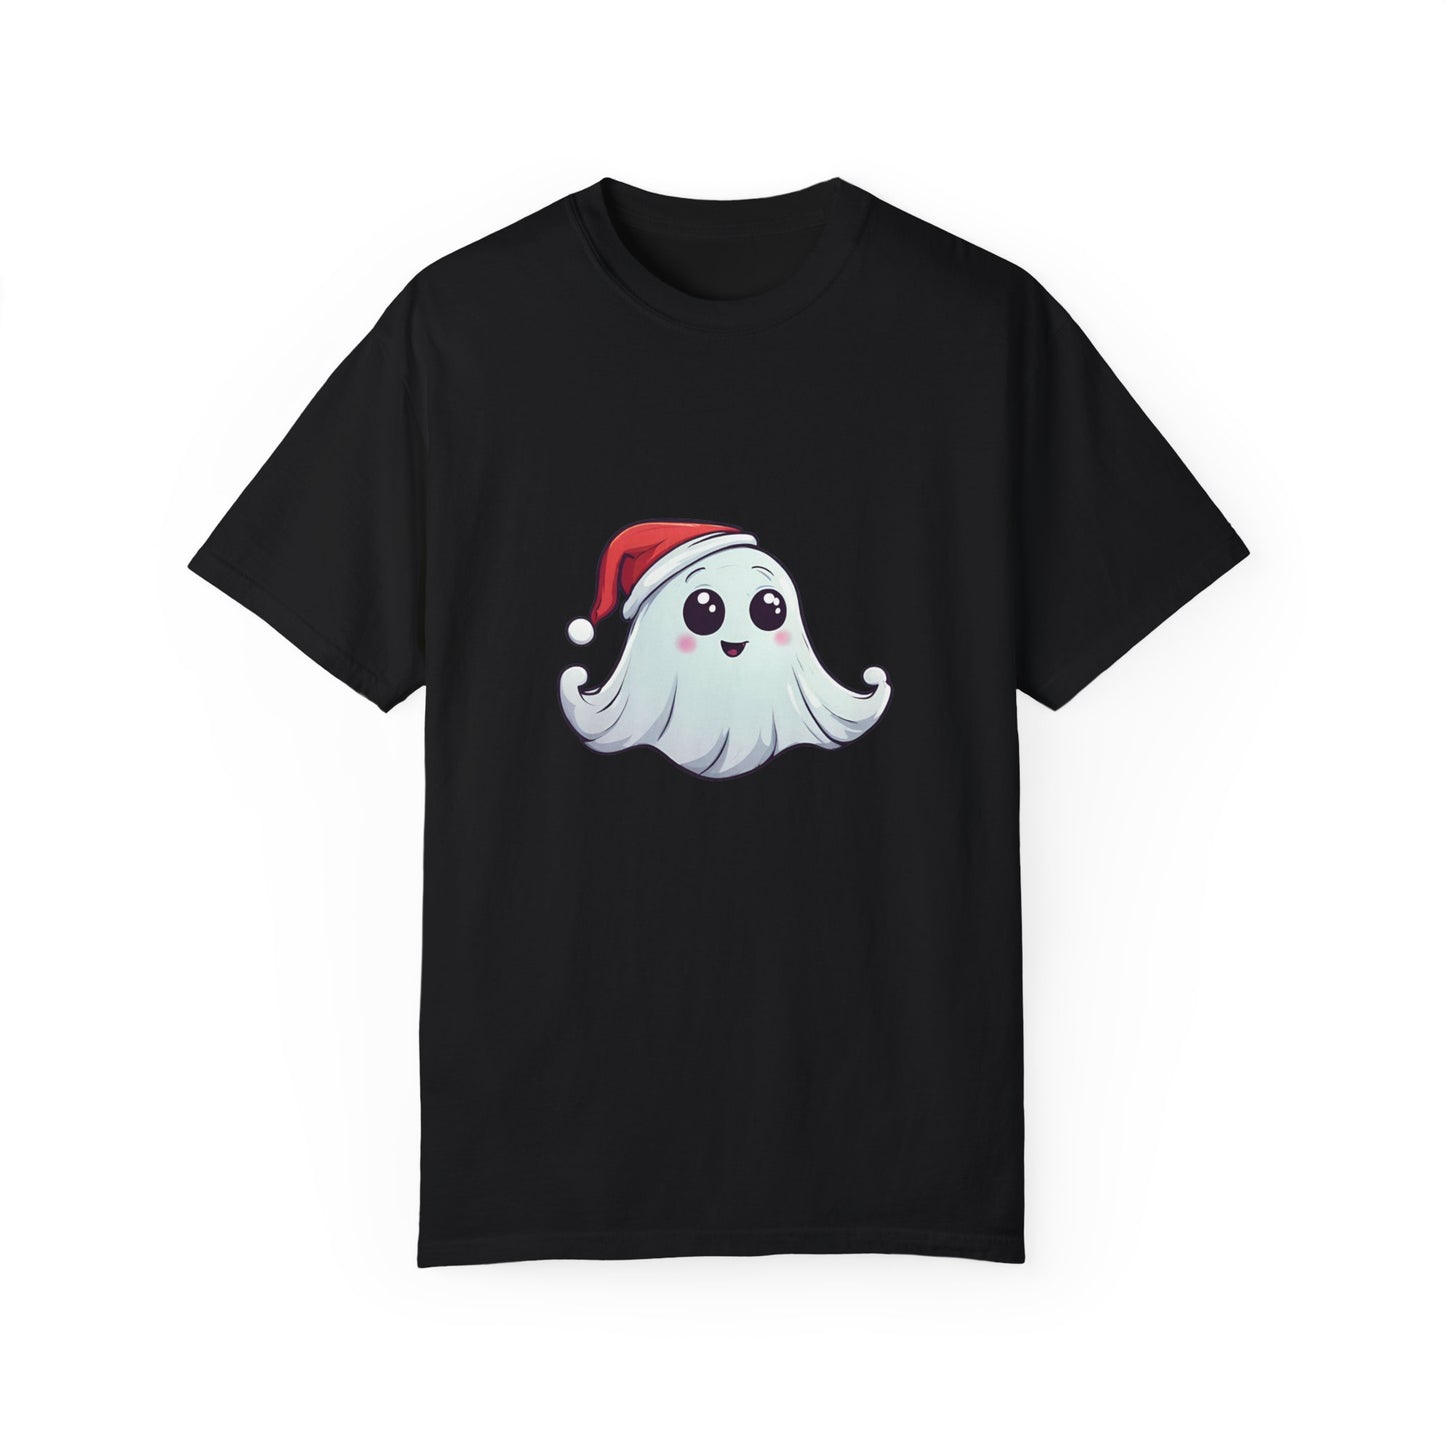 Cute Christina’s ghost t shirt